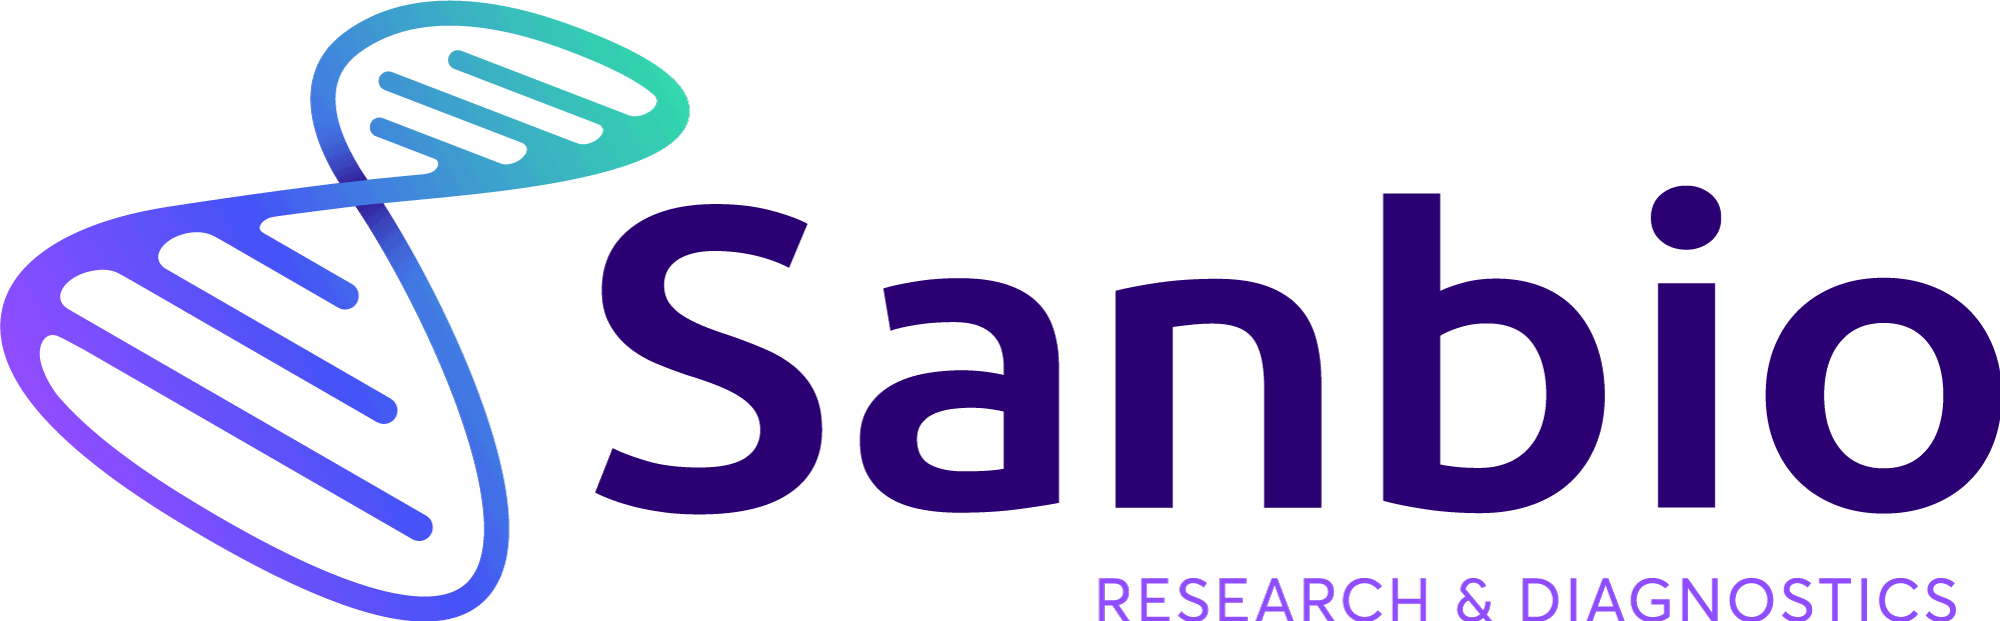 Sanbio Logo